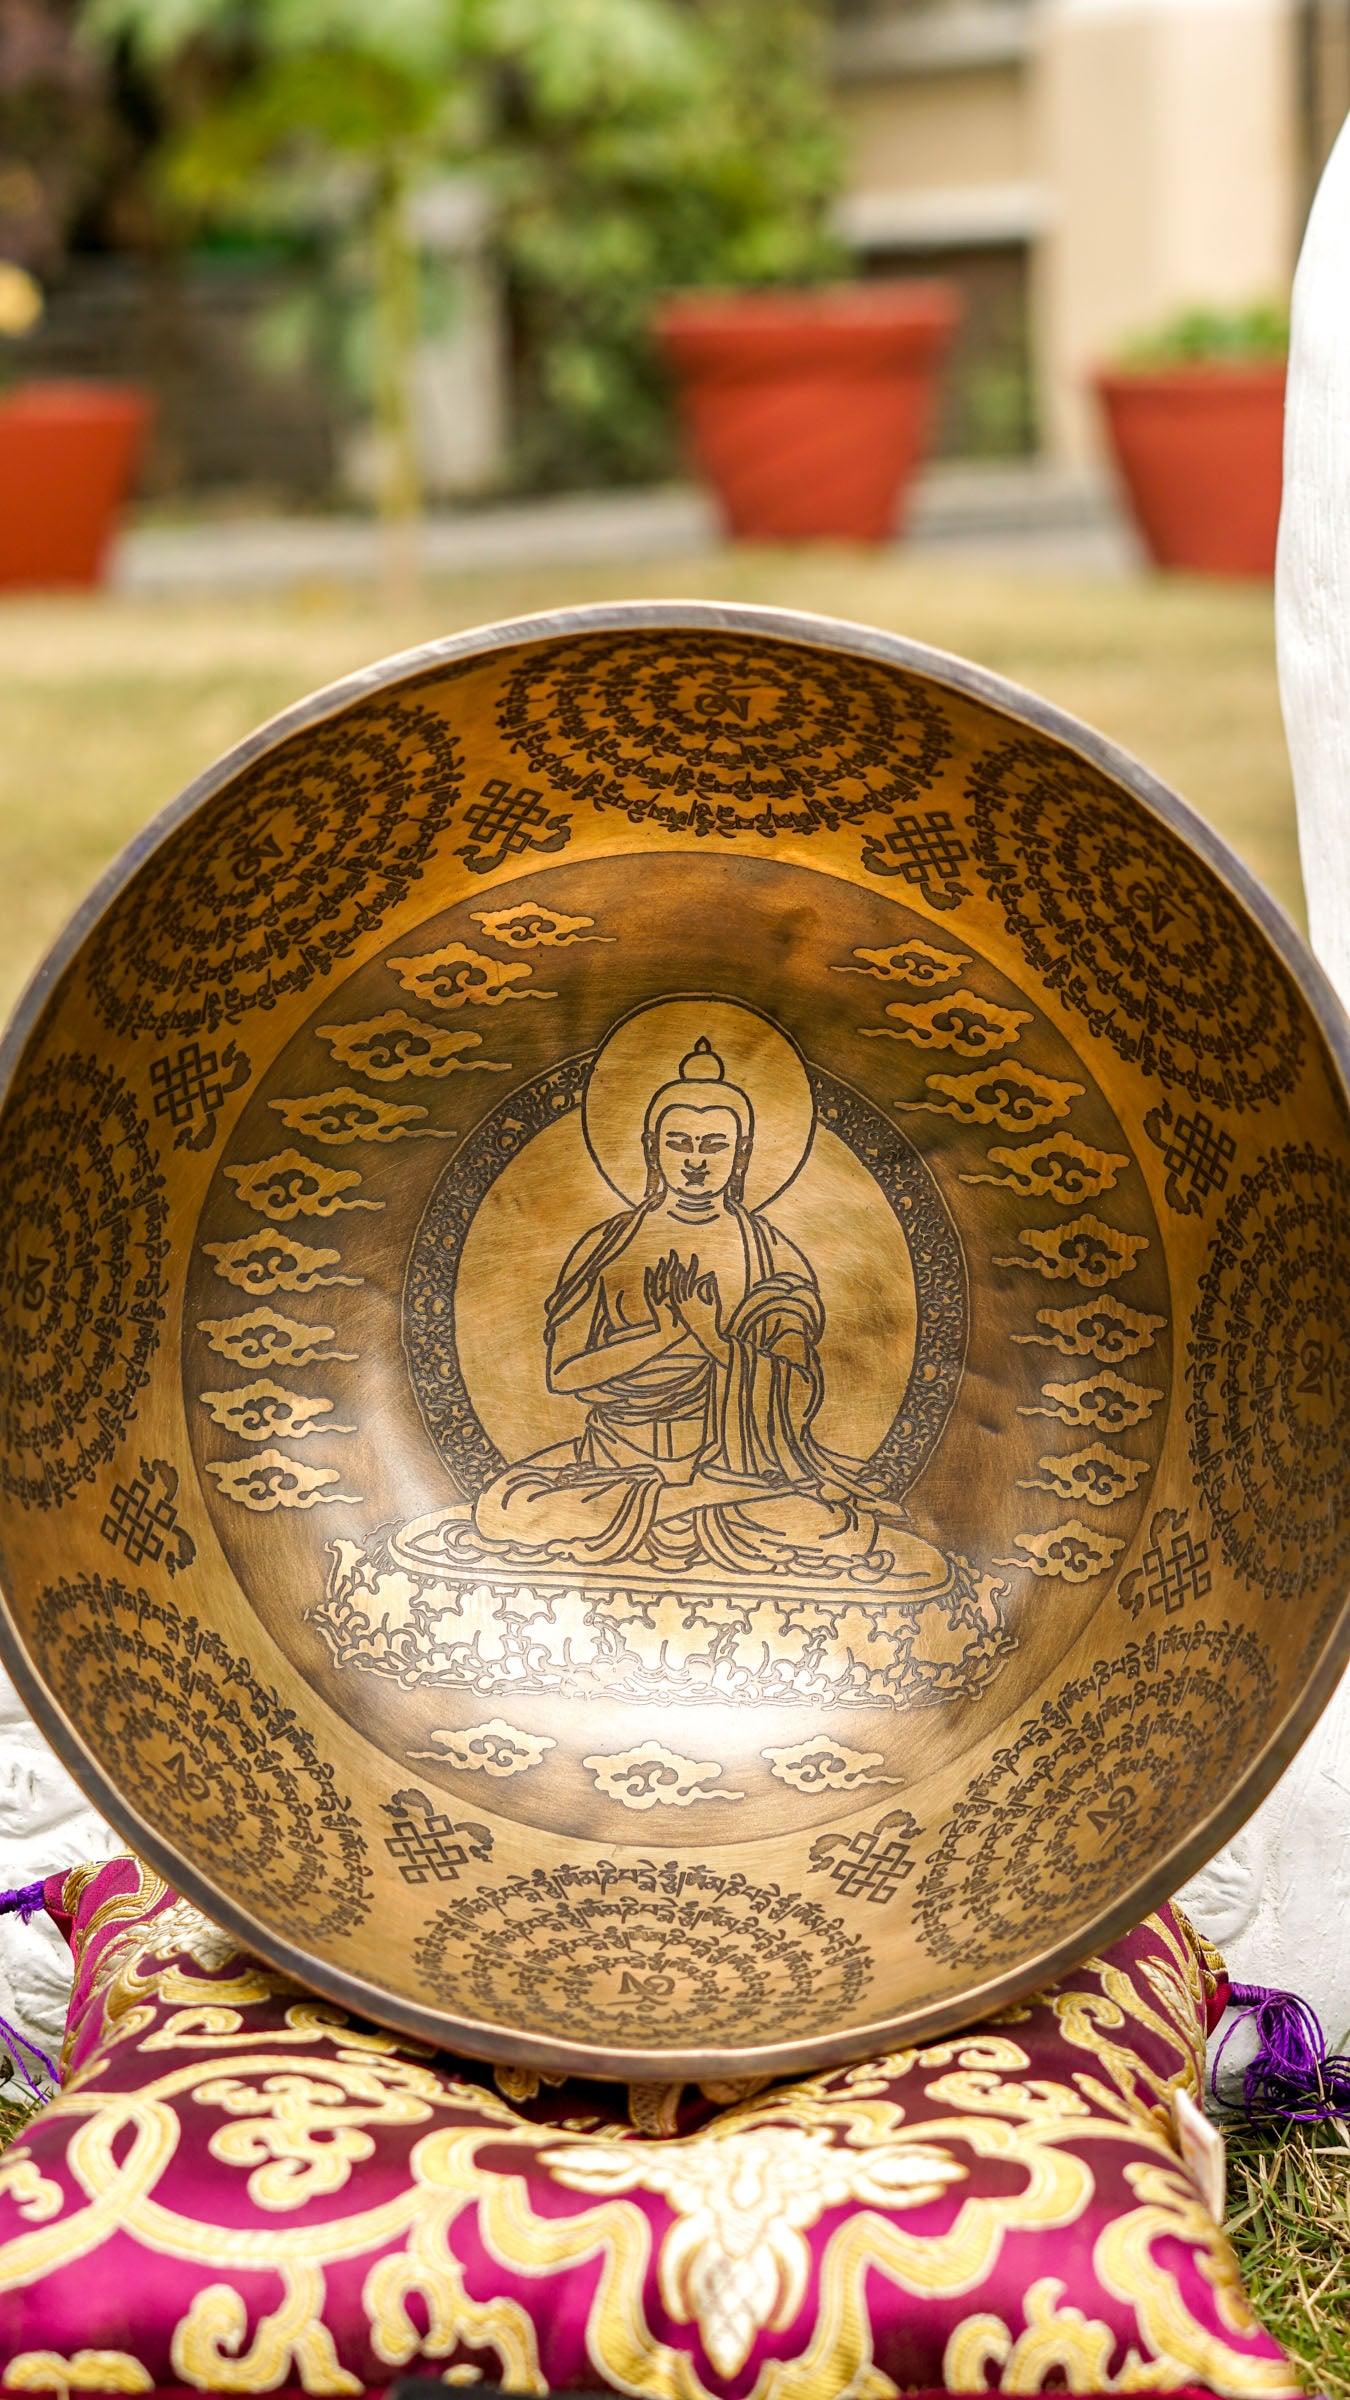 Maitreya Buddha Singing Bowl for Sound healing and meditation. Fine Art high Quality Singing Bowl